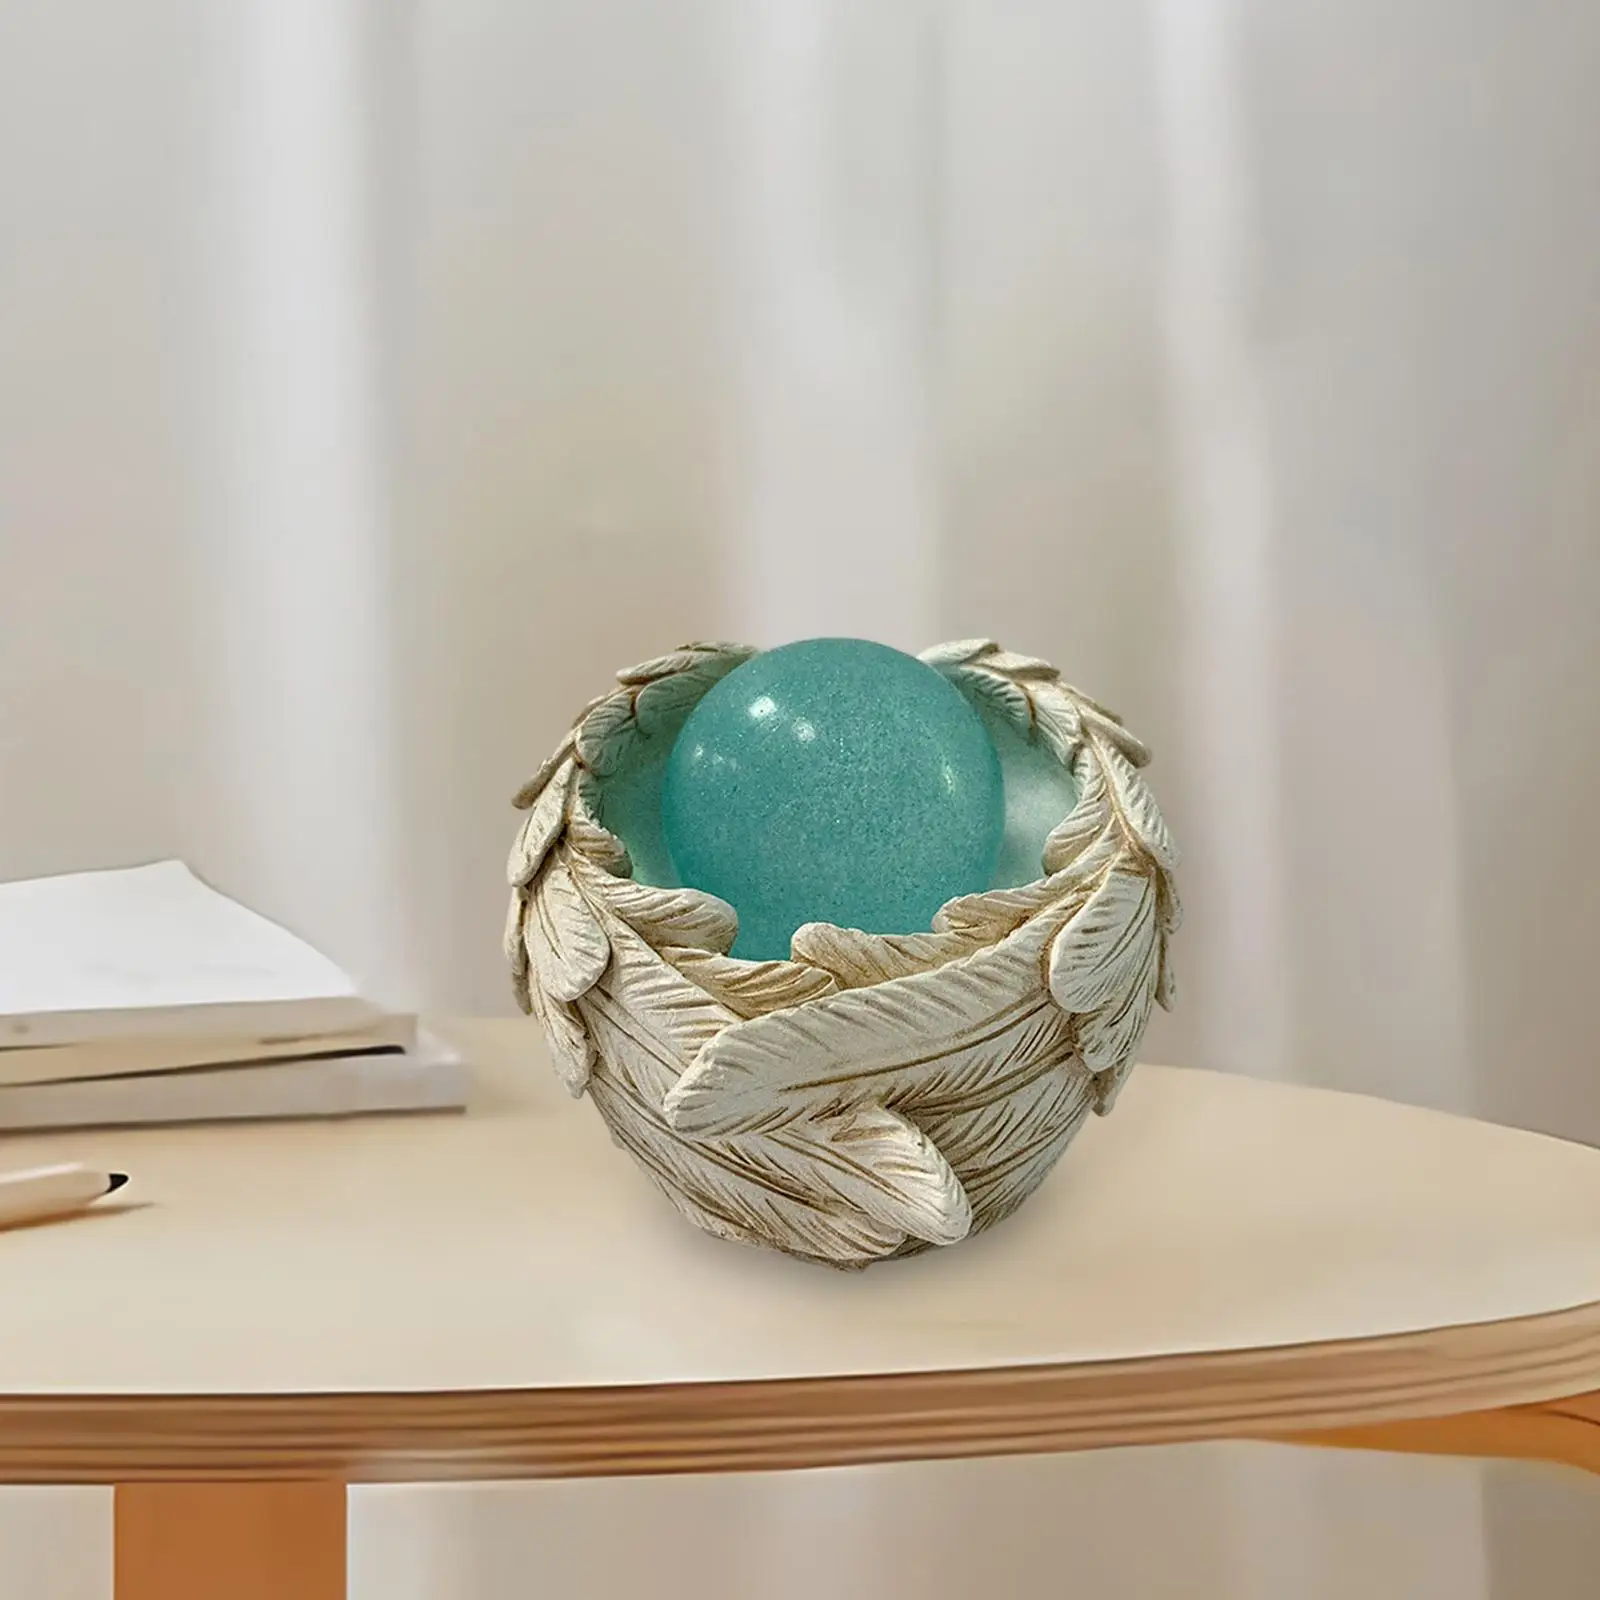 Resin Light up Angel  Ball Figurine Crafts  Heart Shaped for Bookshelf Desktop Home Table Decor